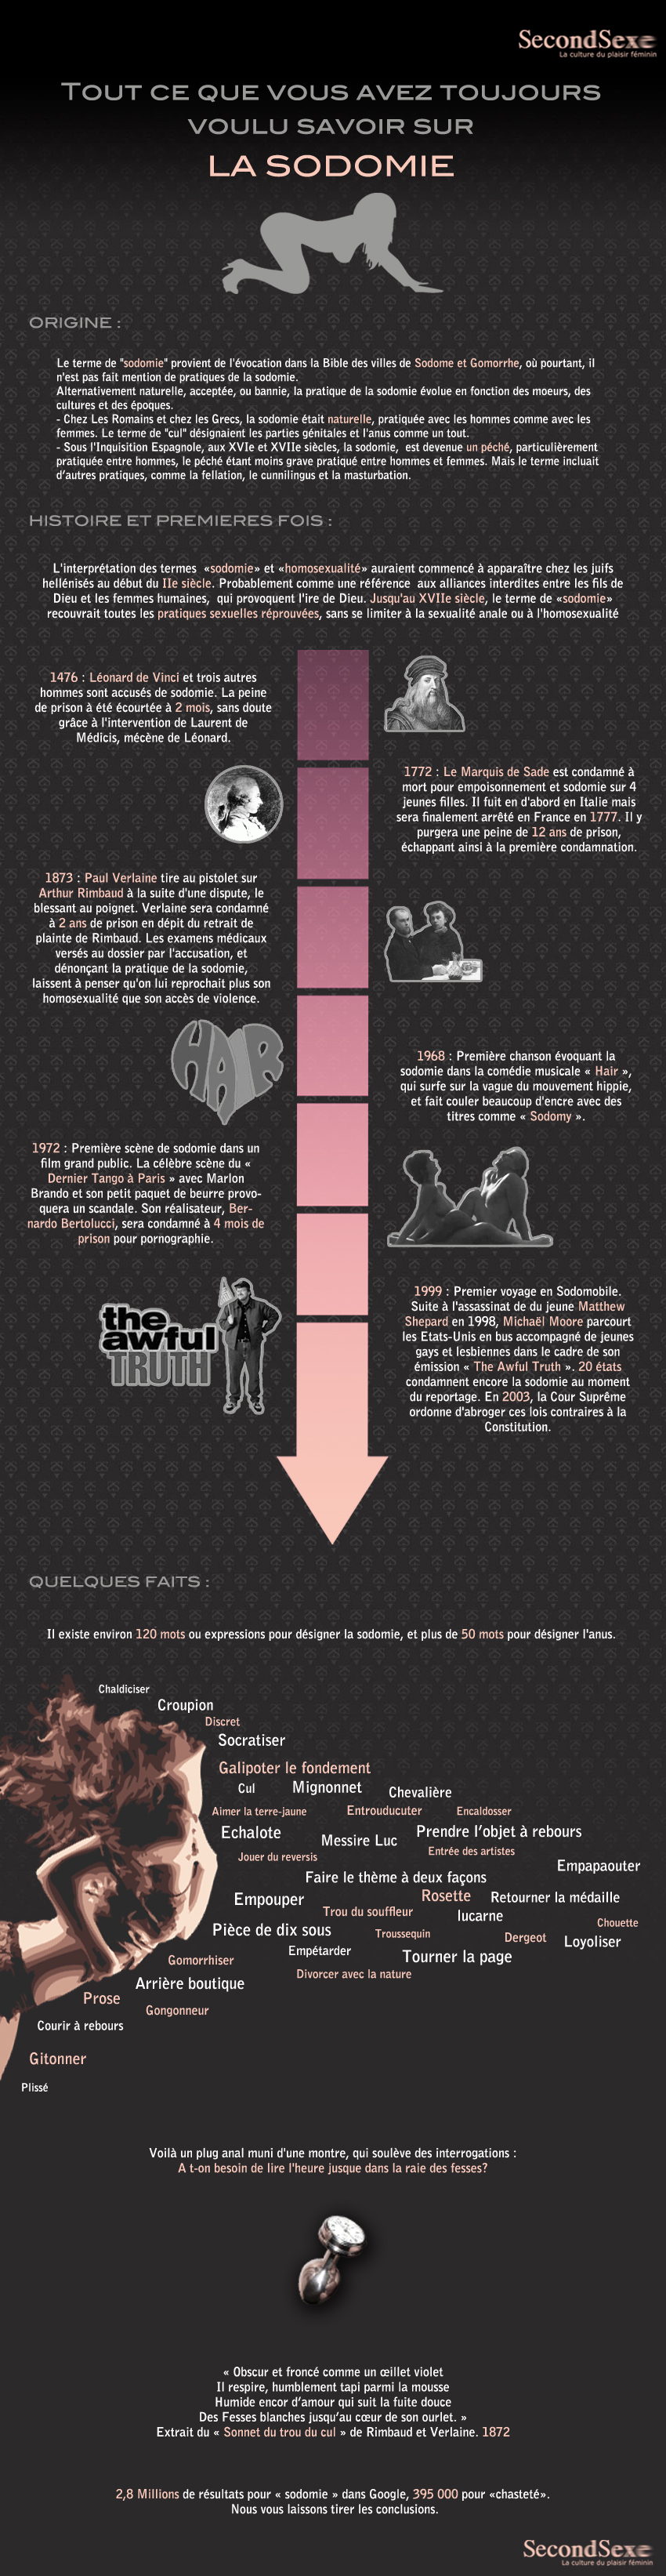 Infographie : La sodomie